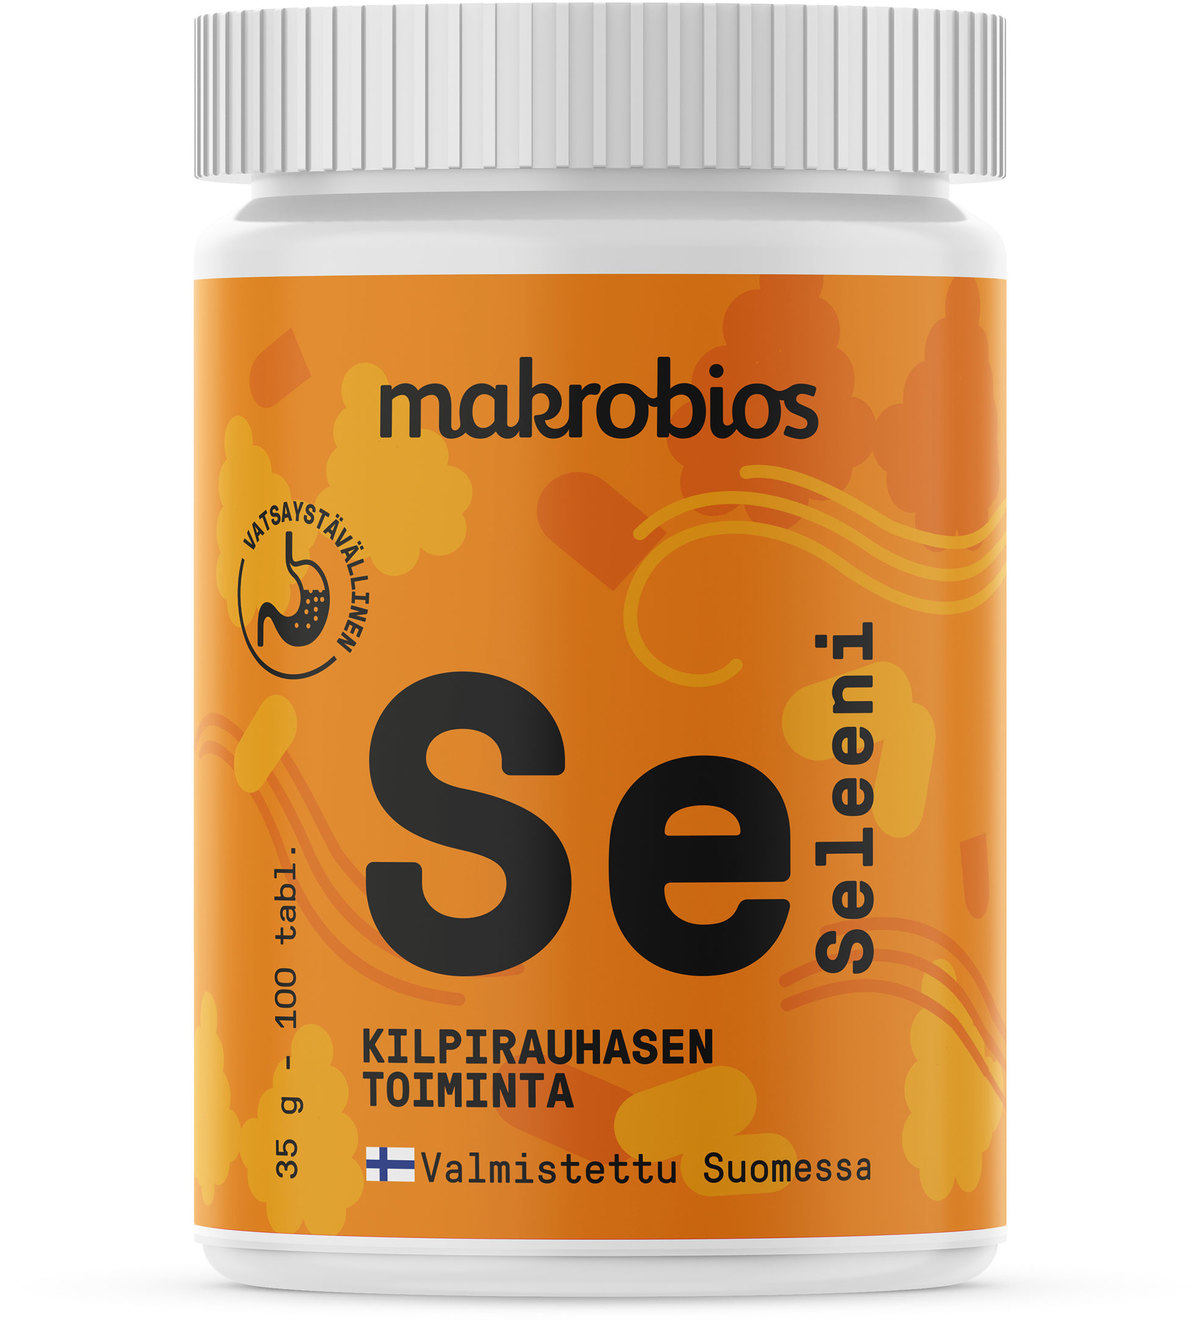 Macrobios Selenium 100 pills 35g